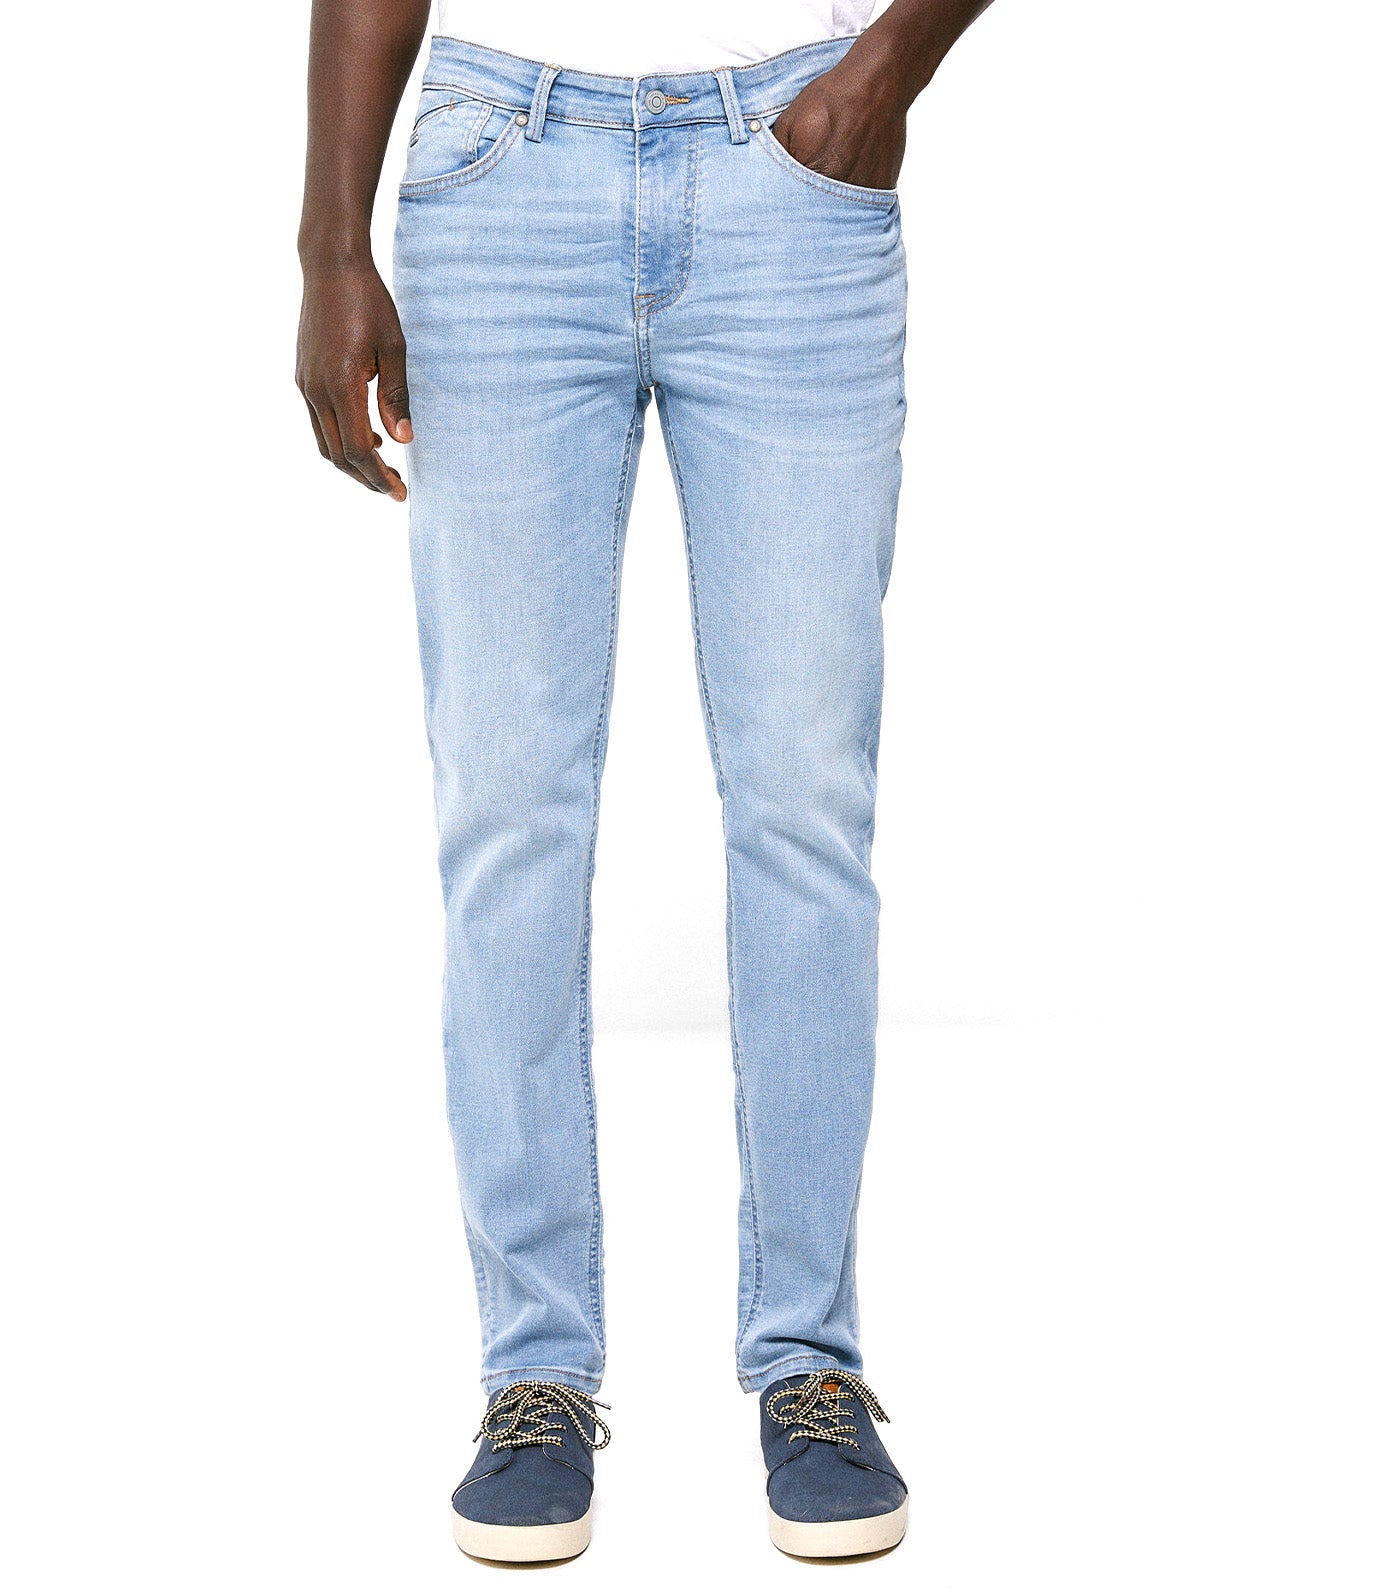 Medium-Light Wash Skinny Jeans Blue